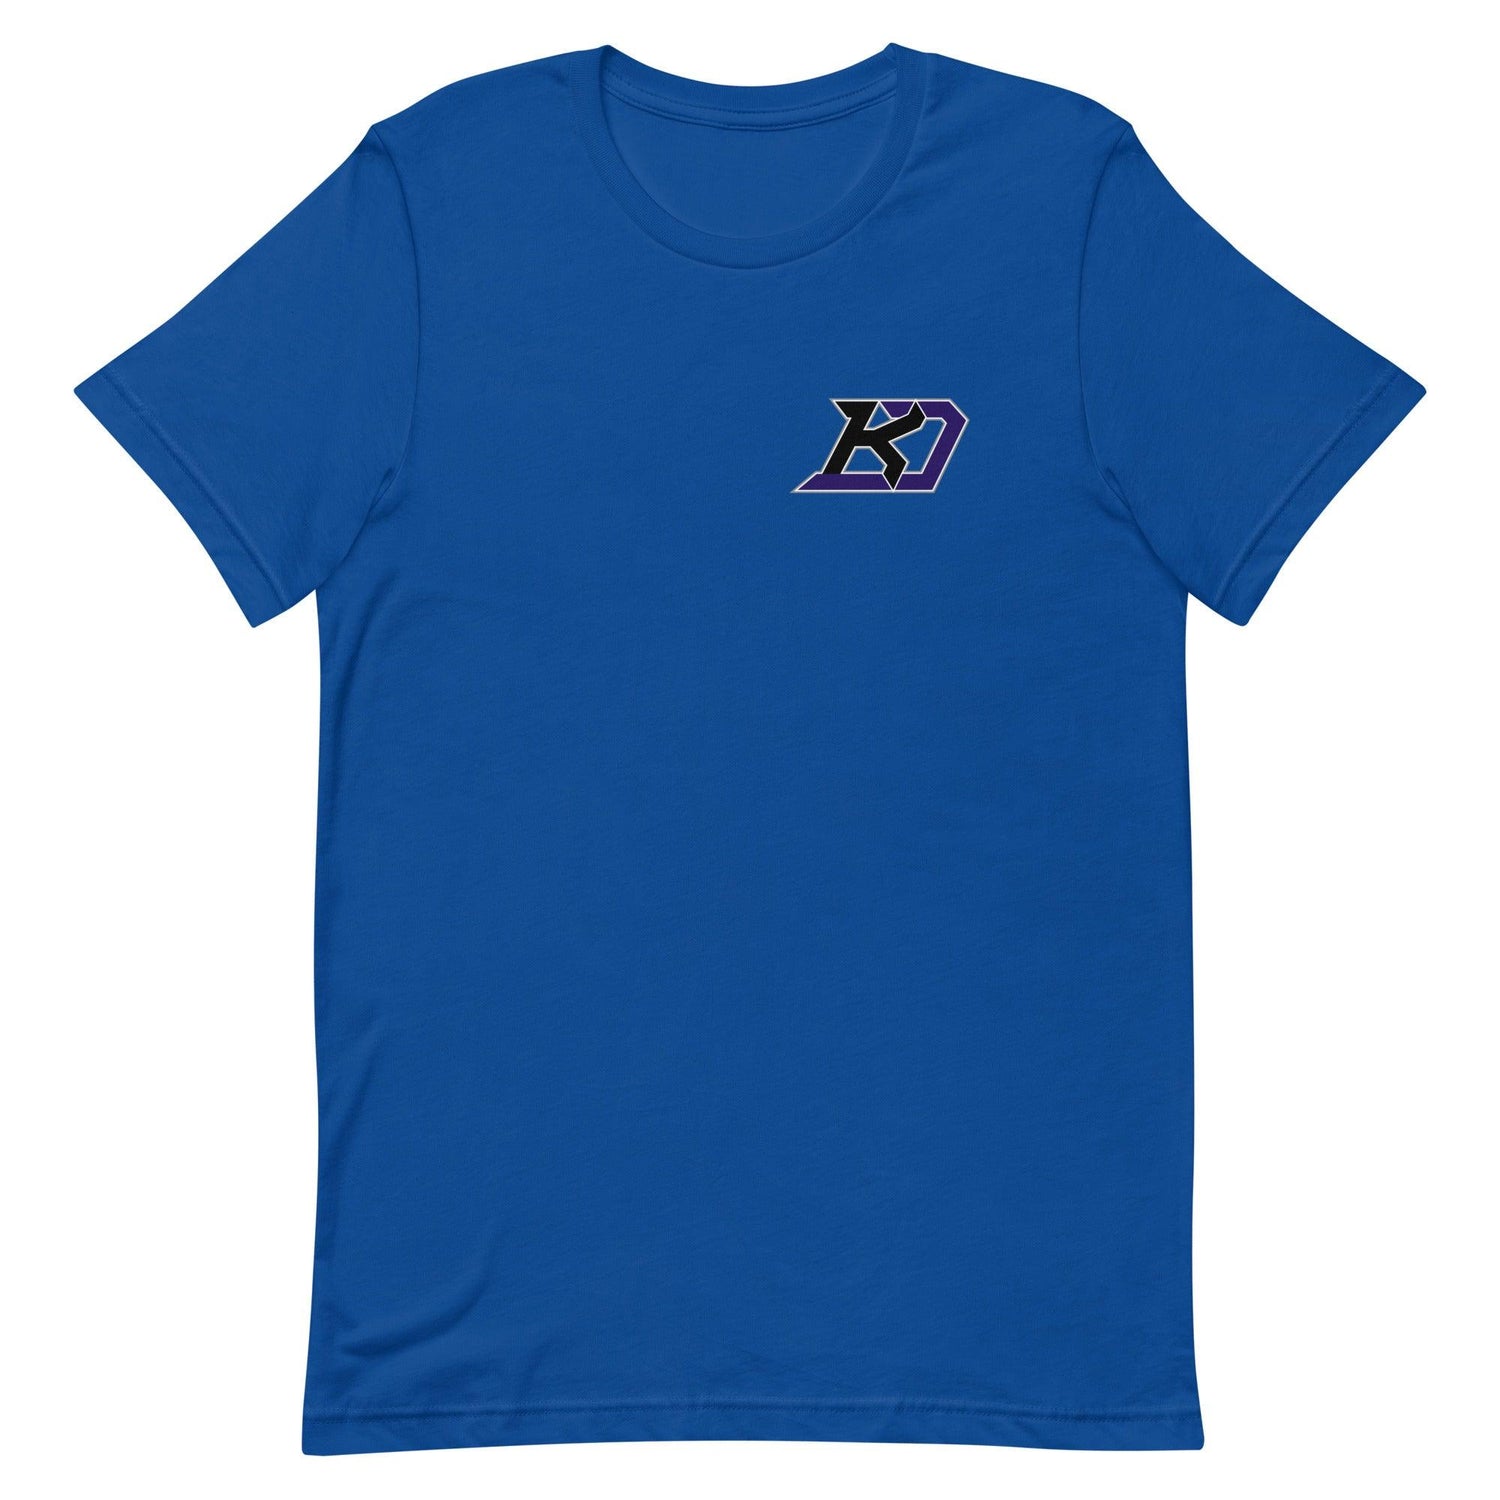 Kyle Datres “Signature” t-shirt - Fan Arch